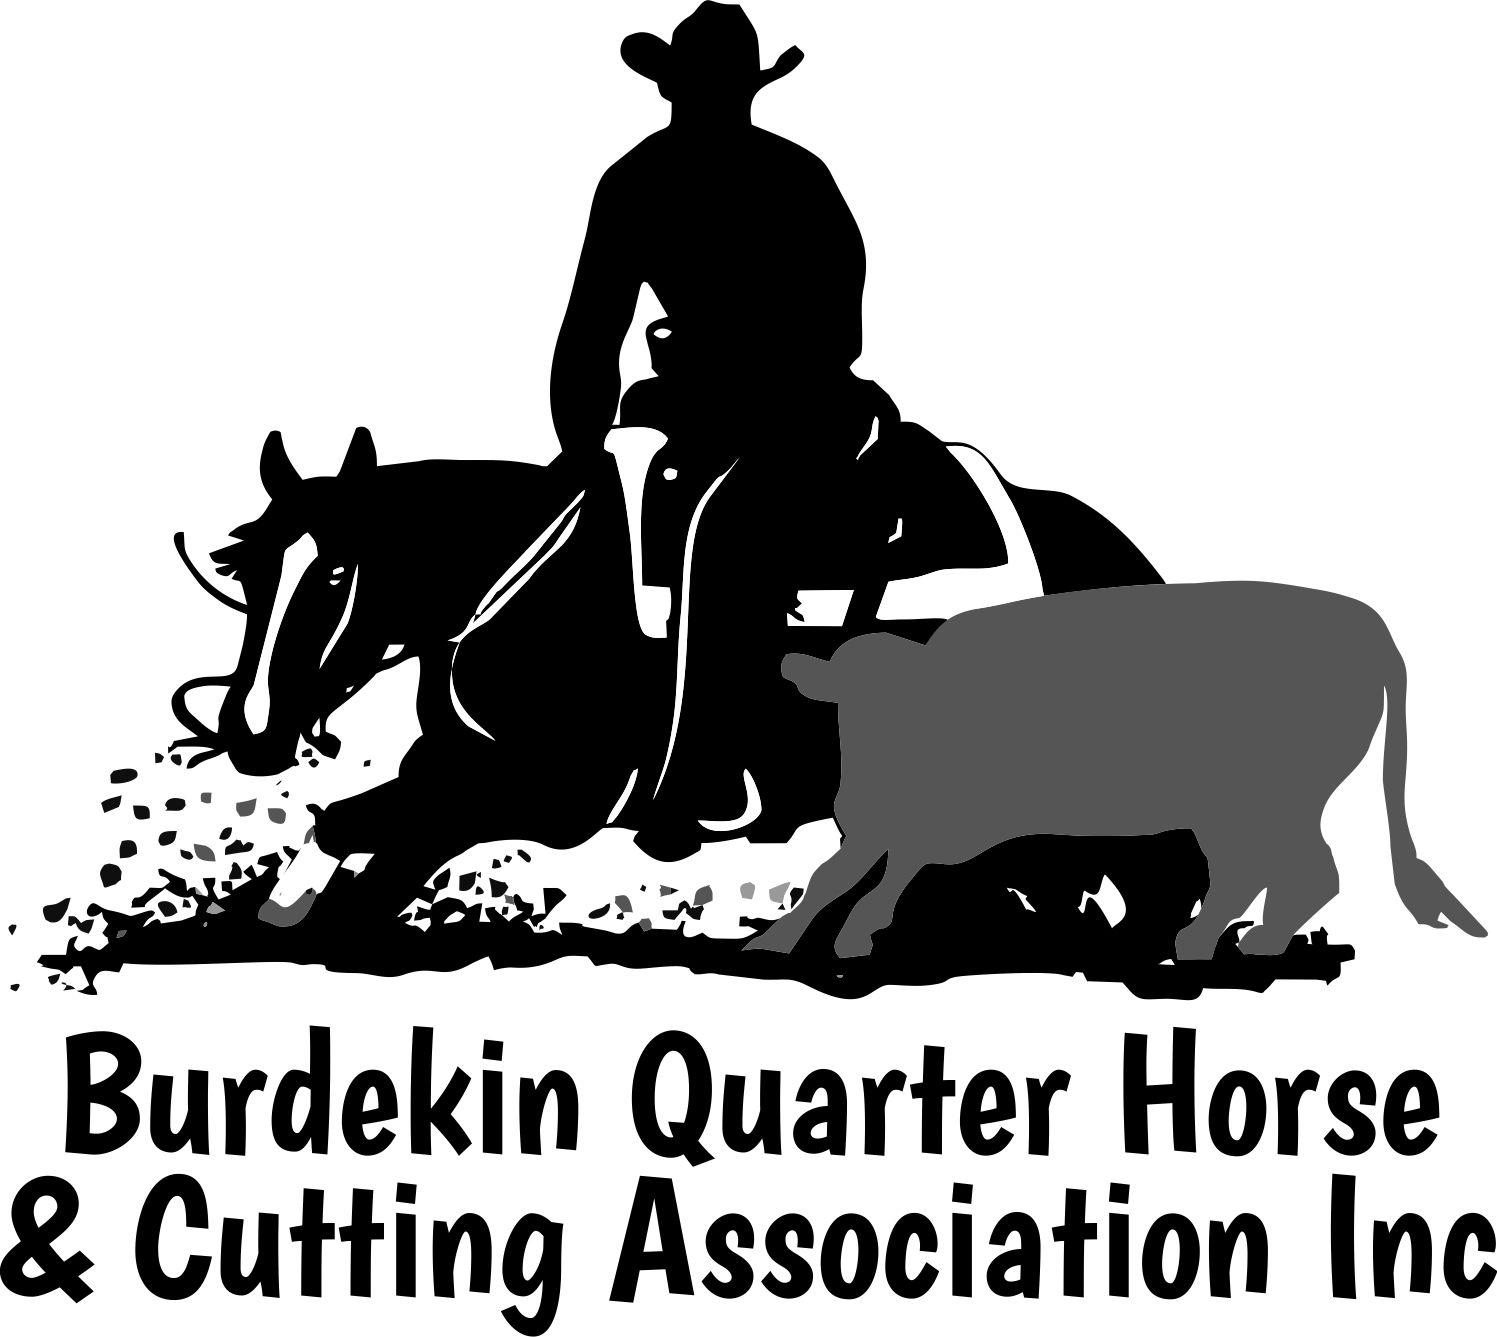 Cutting Horse Logo - Burdekin Quarter Horse & Cutting Association Inc